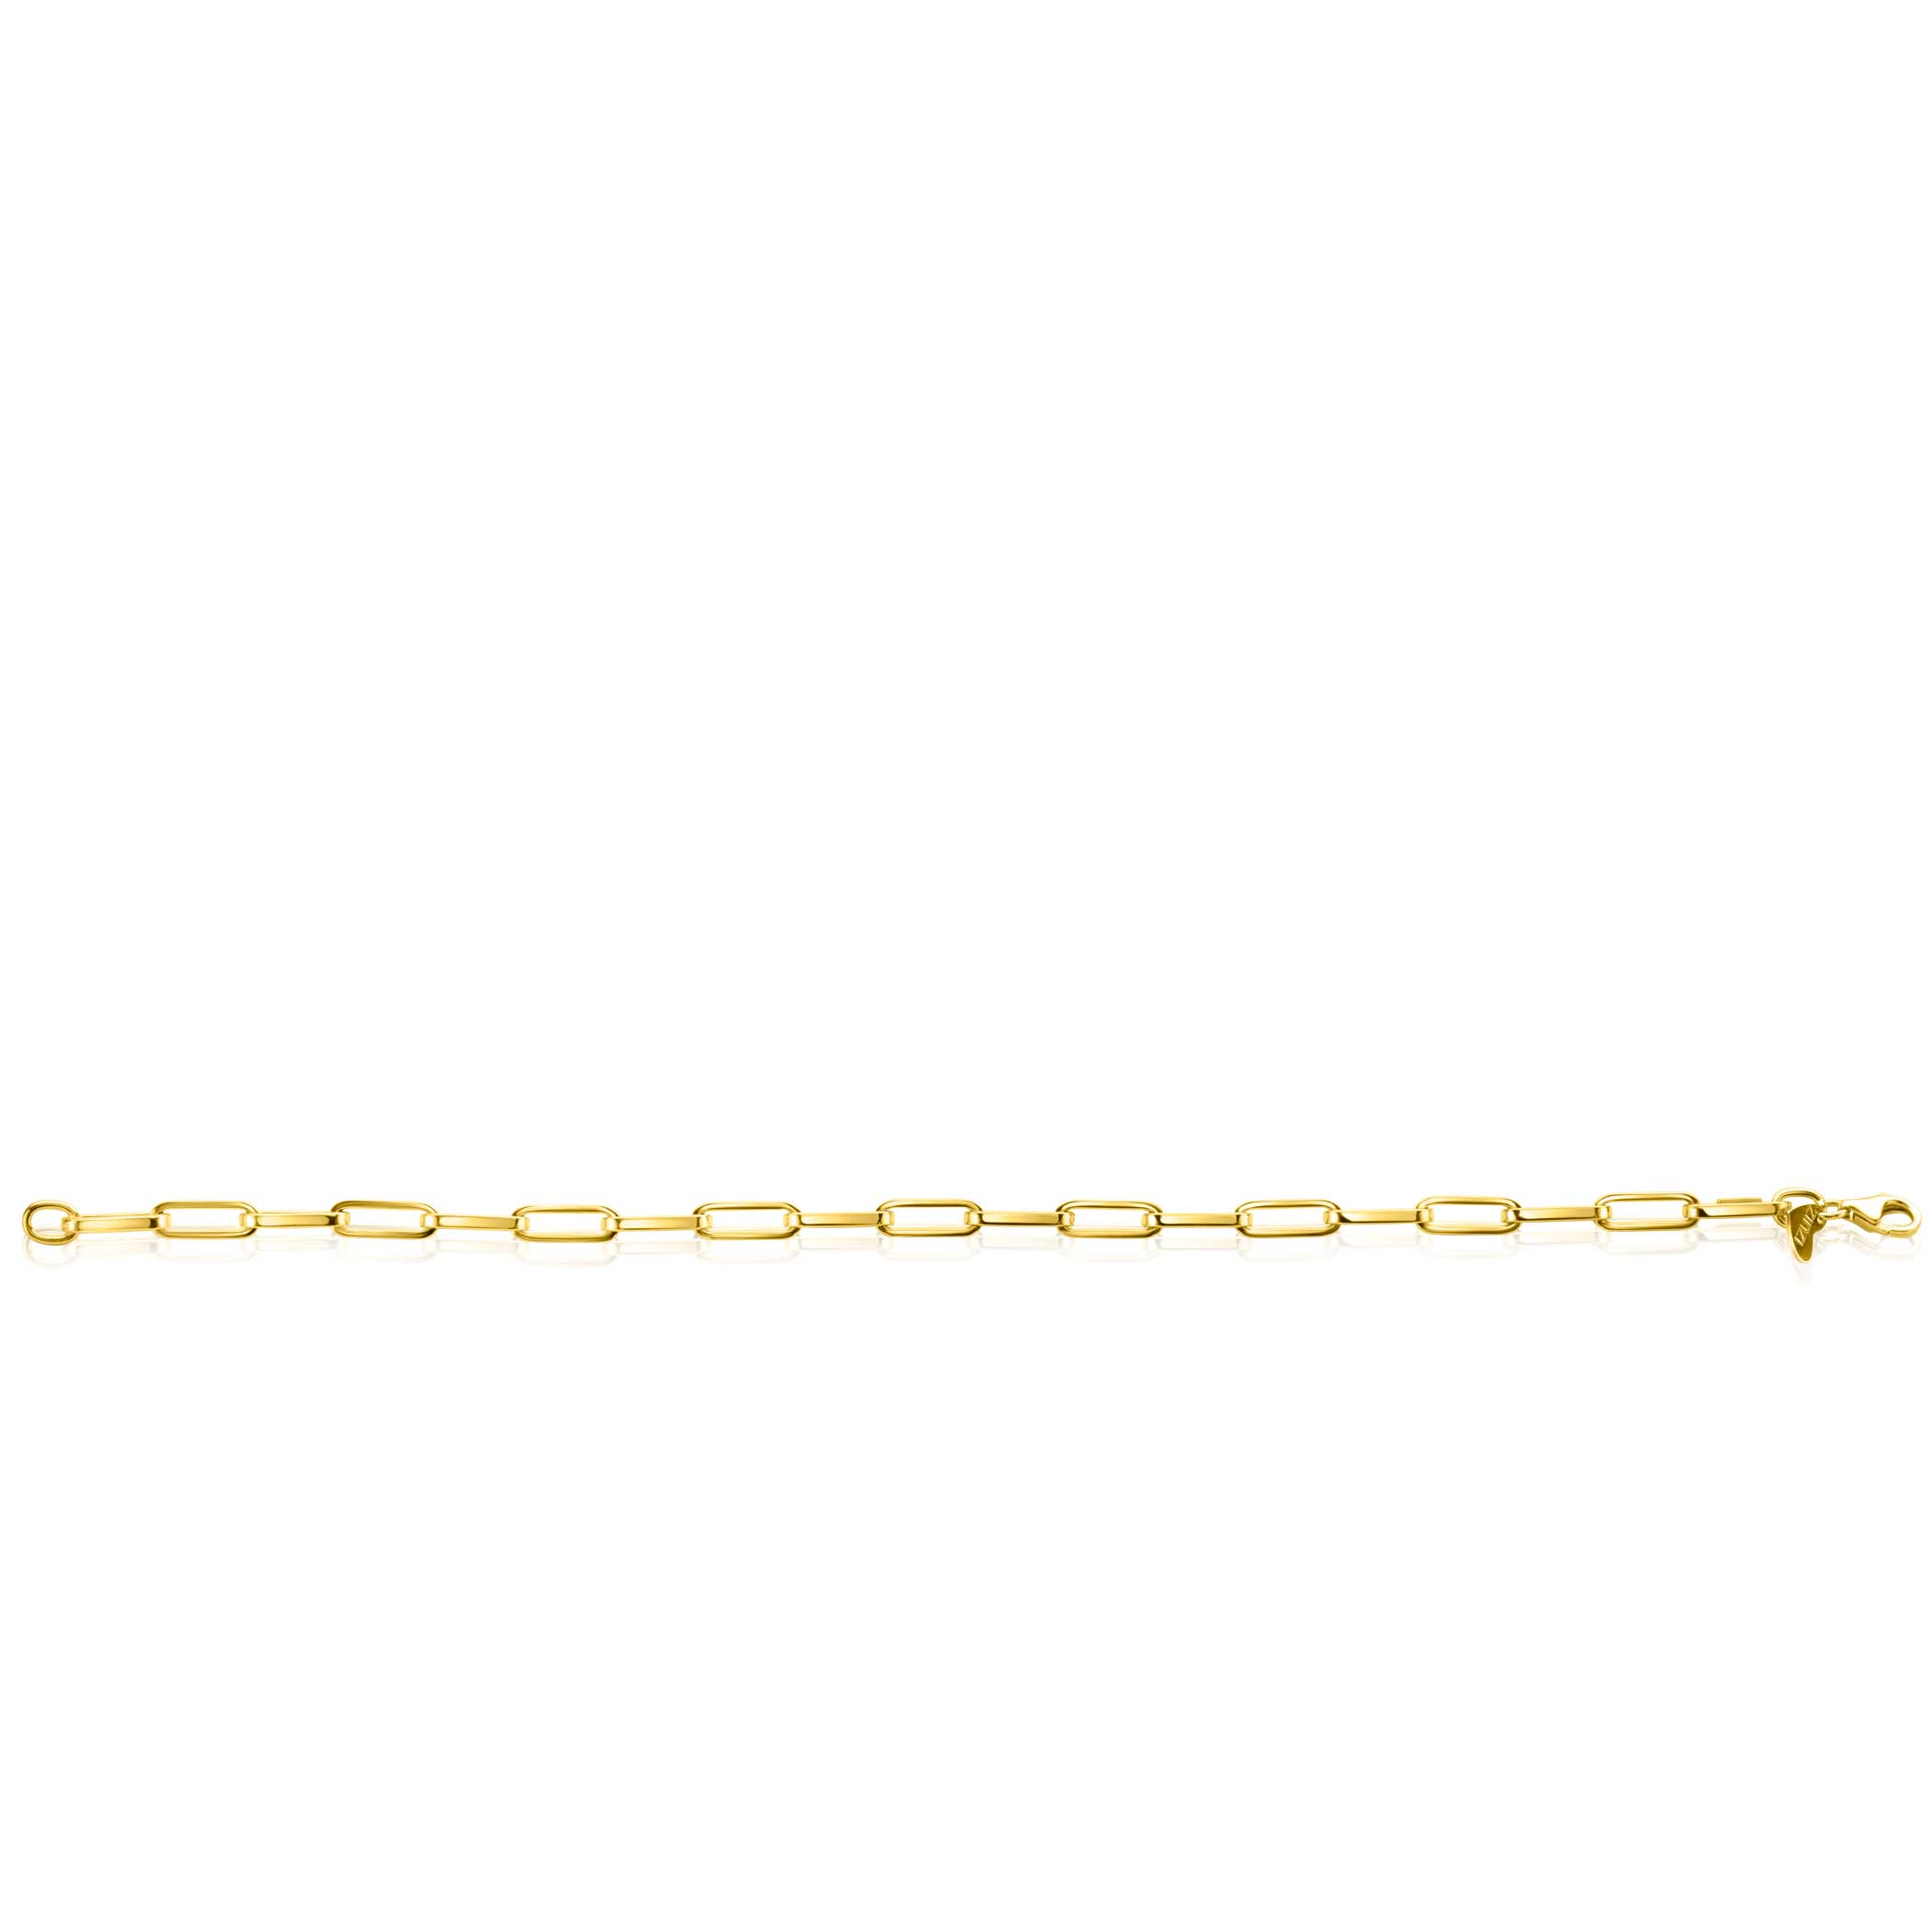 ZINZI Gold 14 krt gouden armband met trendy paperclip/closed for ever schakels 4mm breed, lengte 19cm ZGA347